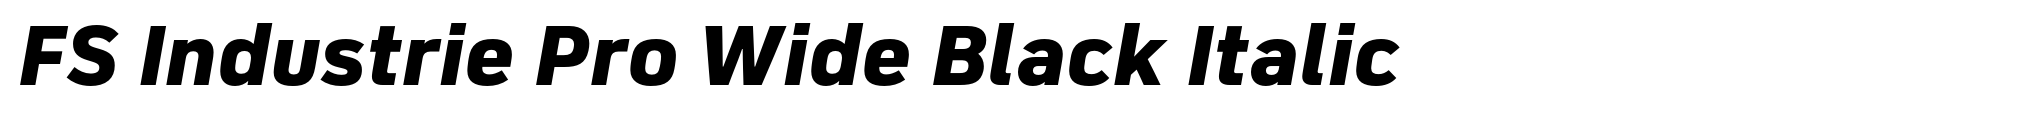 FS Industrie Pro Wide Black Italic image